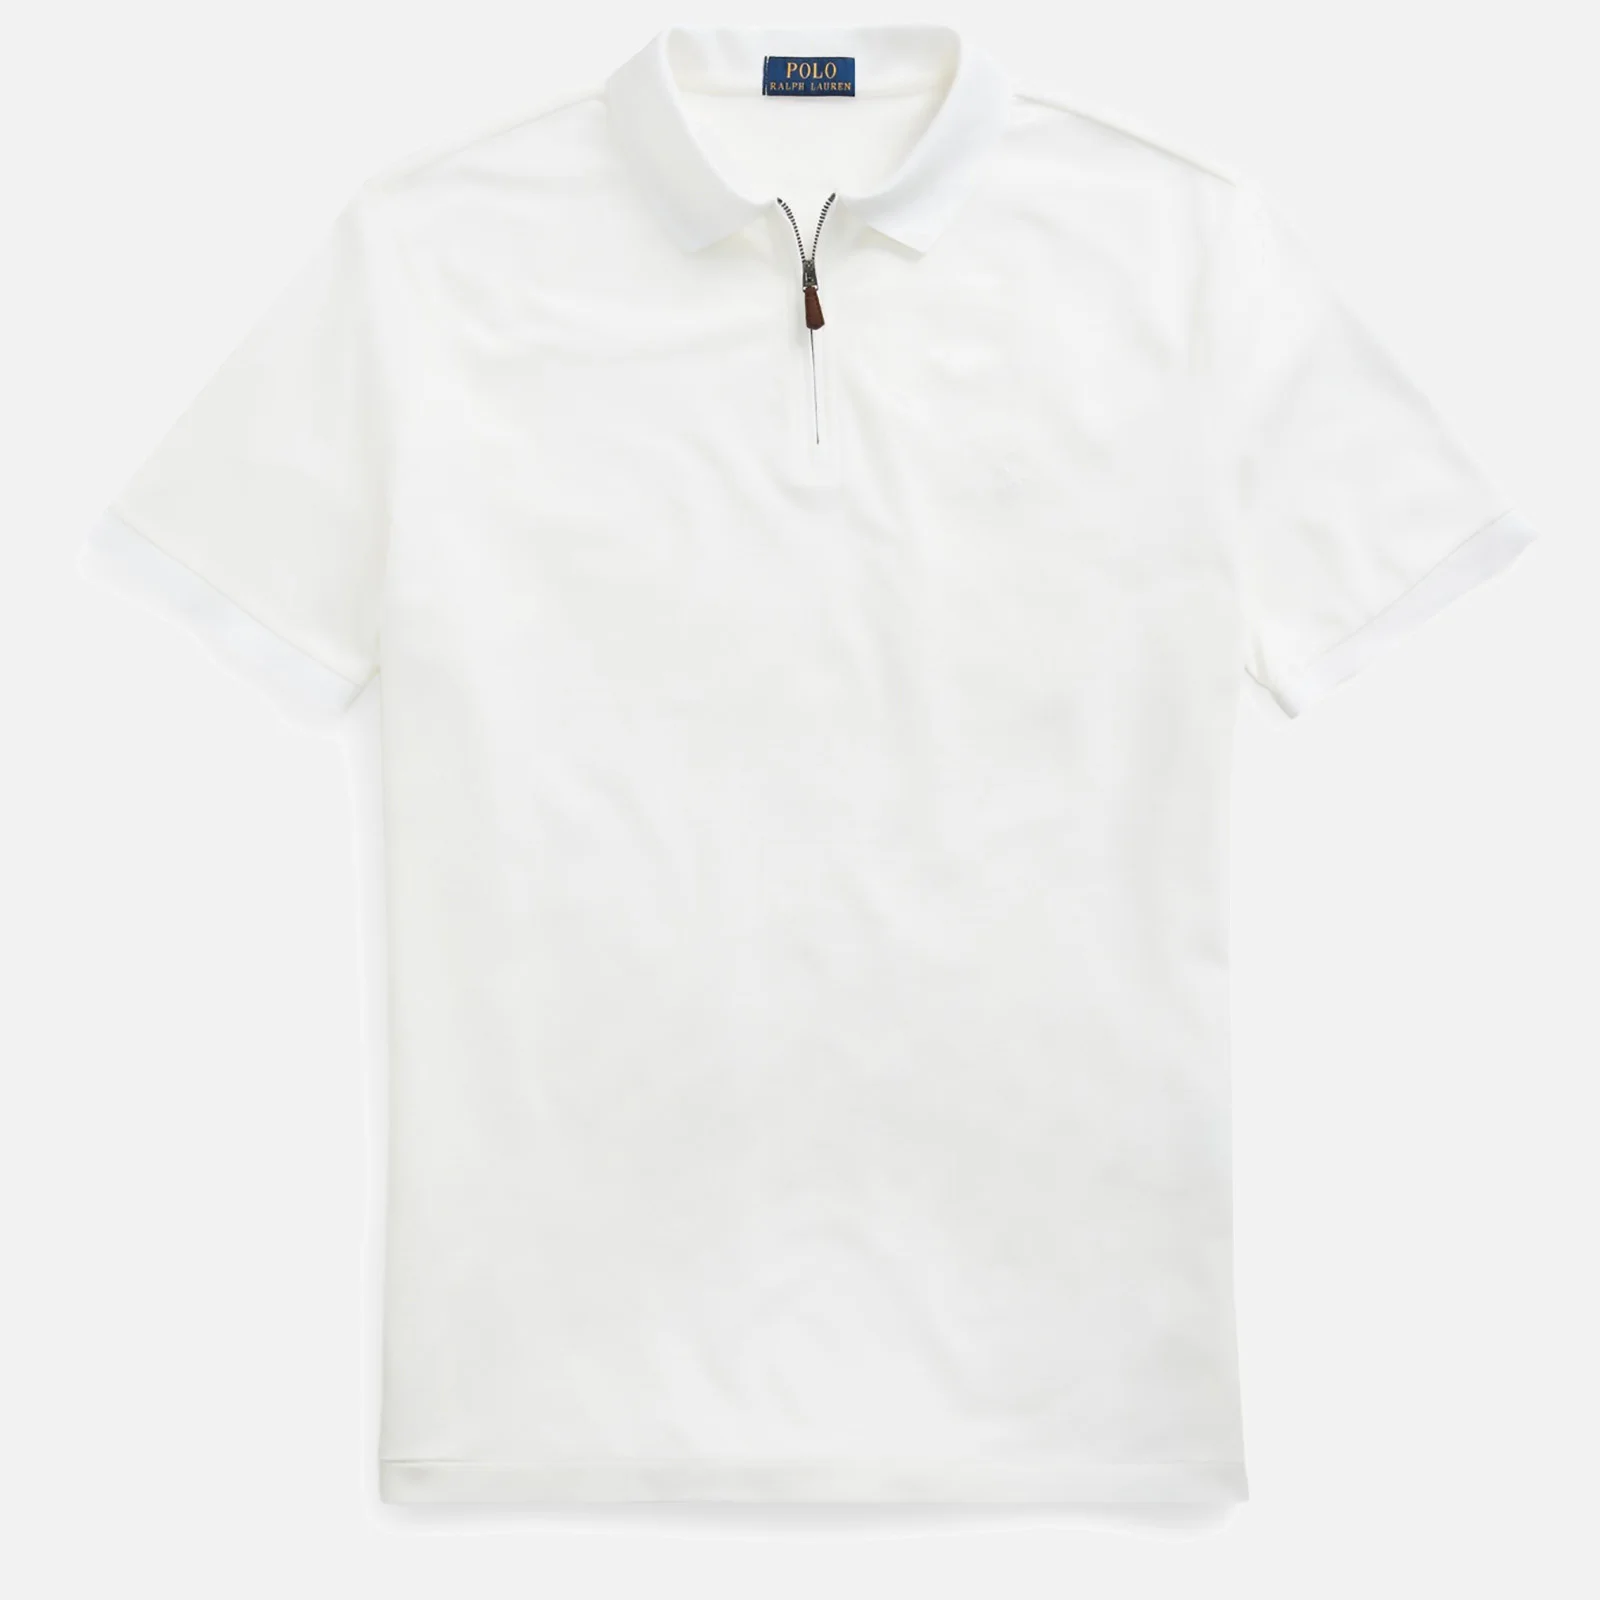 Polo Ralph Lauren Men's Half Zip Polo Shirt - White Image 1